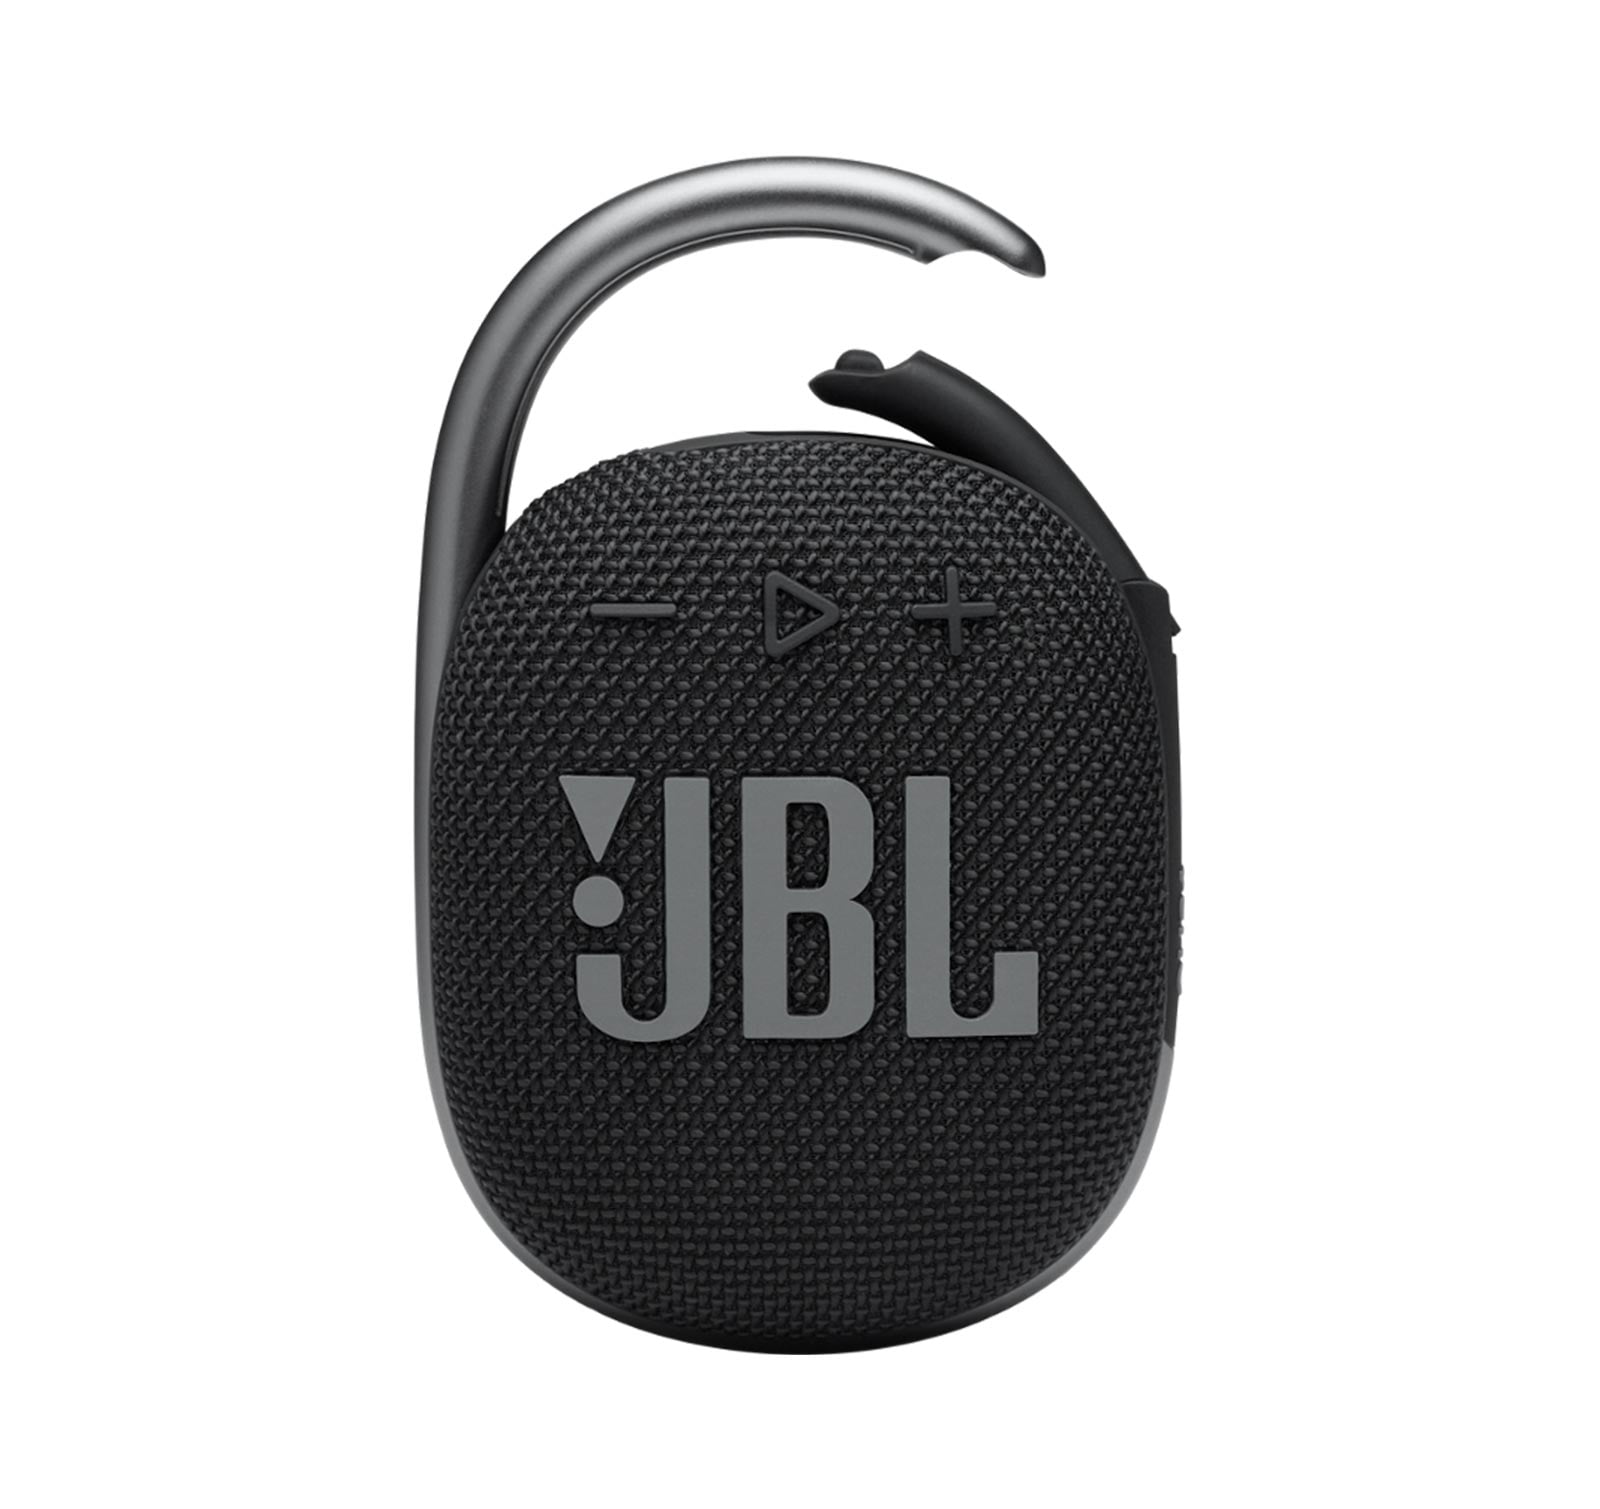 Braven Portable Bluetooth Speaker, Black, BRV-105 